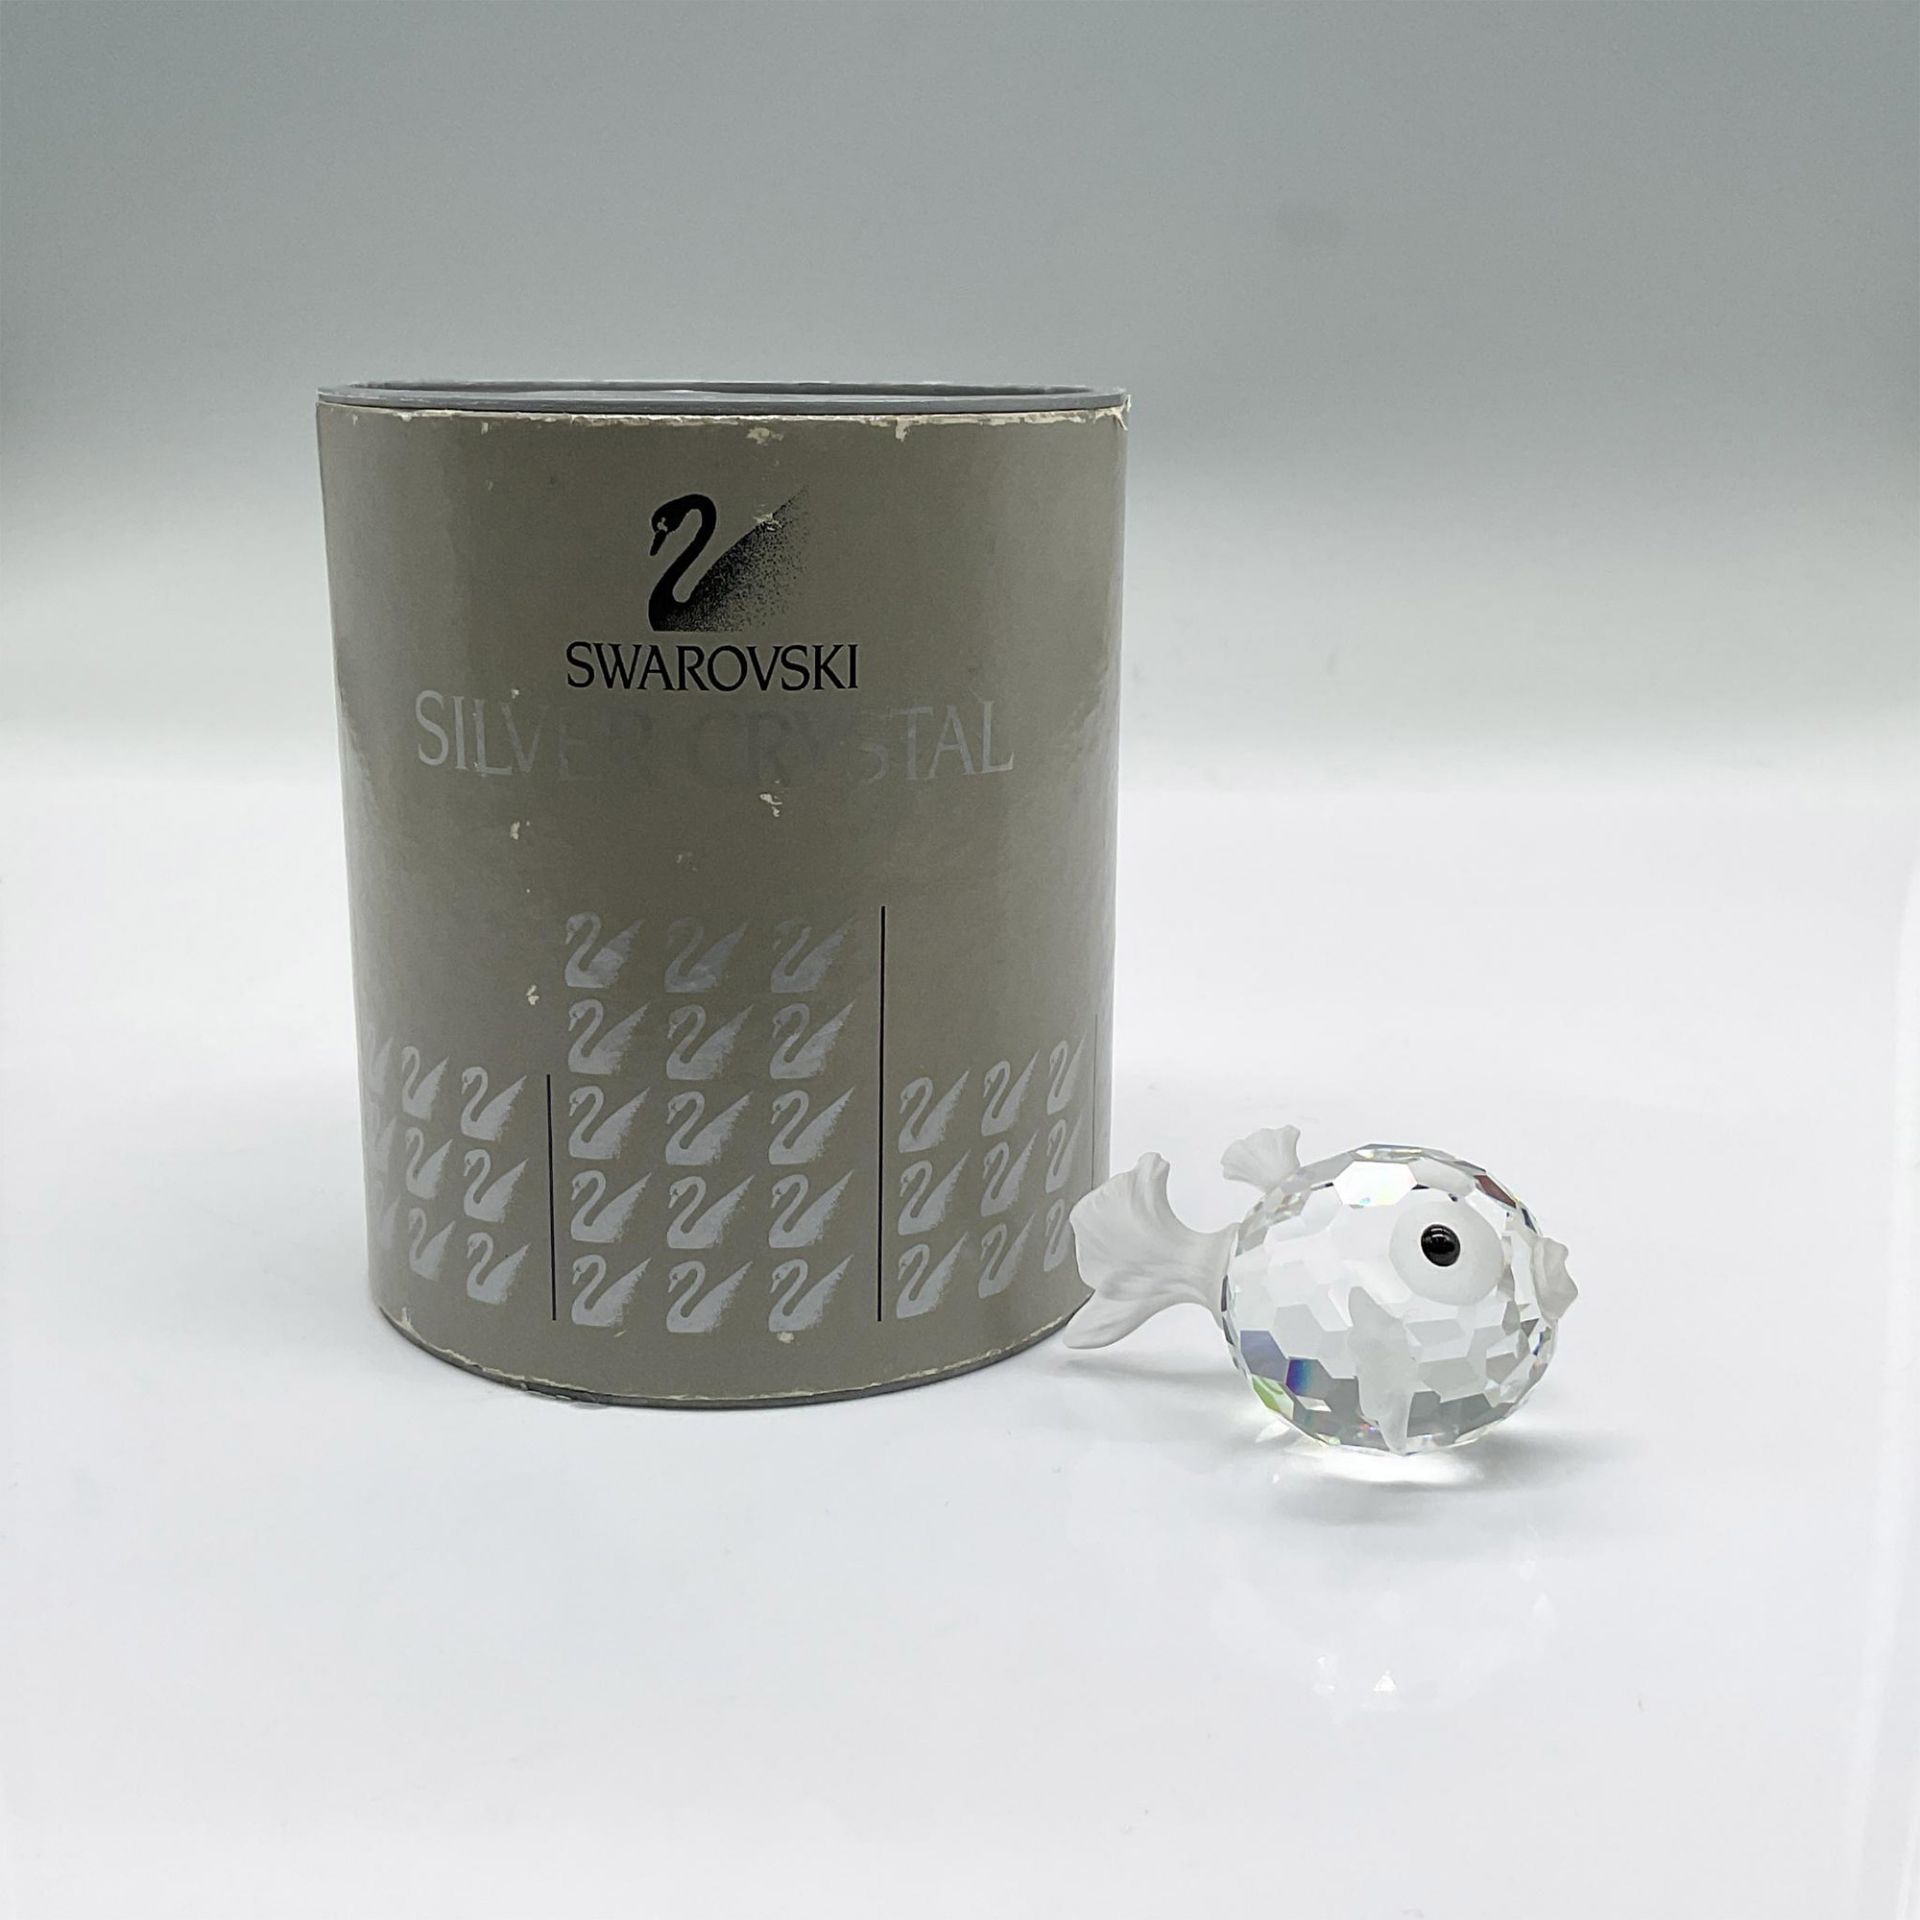 Swarovski Silver Crystal Figurine, Small Blowfish - Image 6 of 6